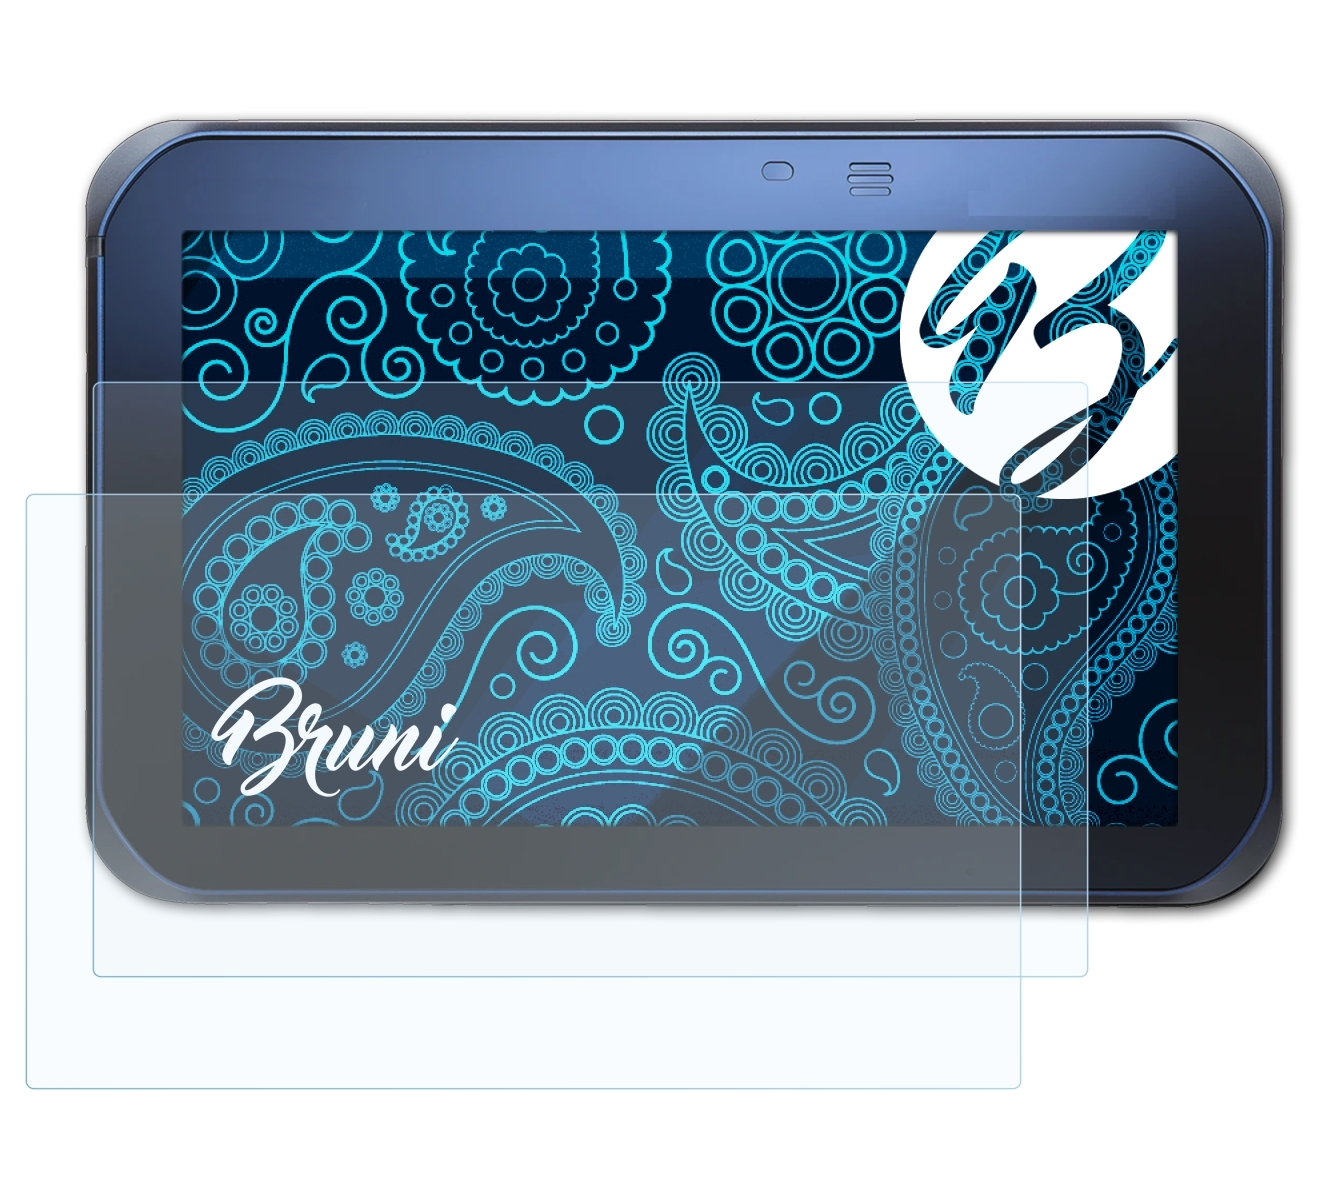 BRUNI 2x Basics-Clear Schutzfolie(für Panasonic L1) Toughbook